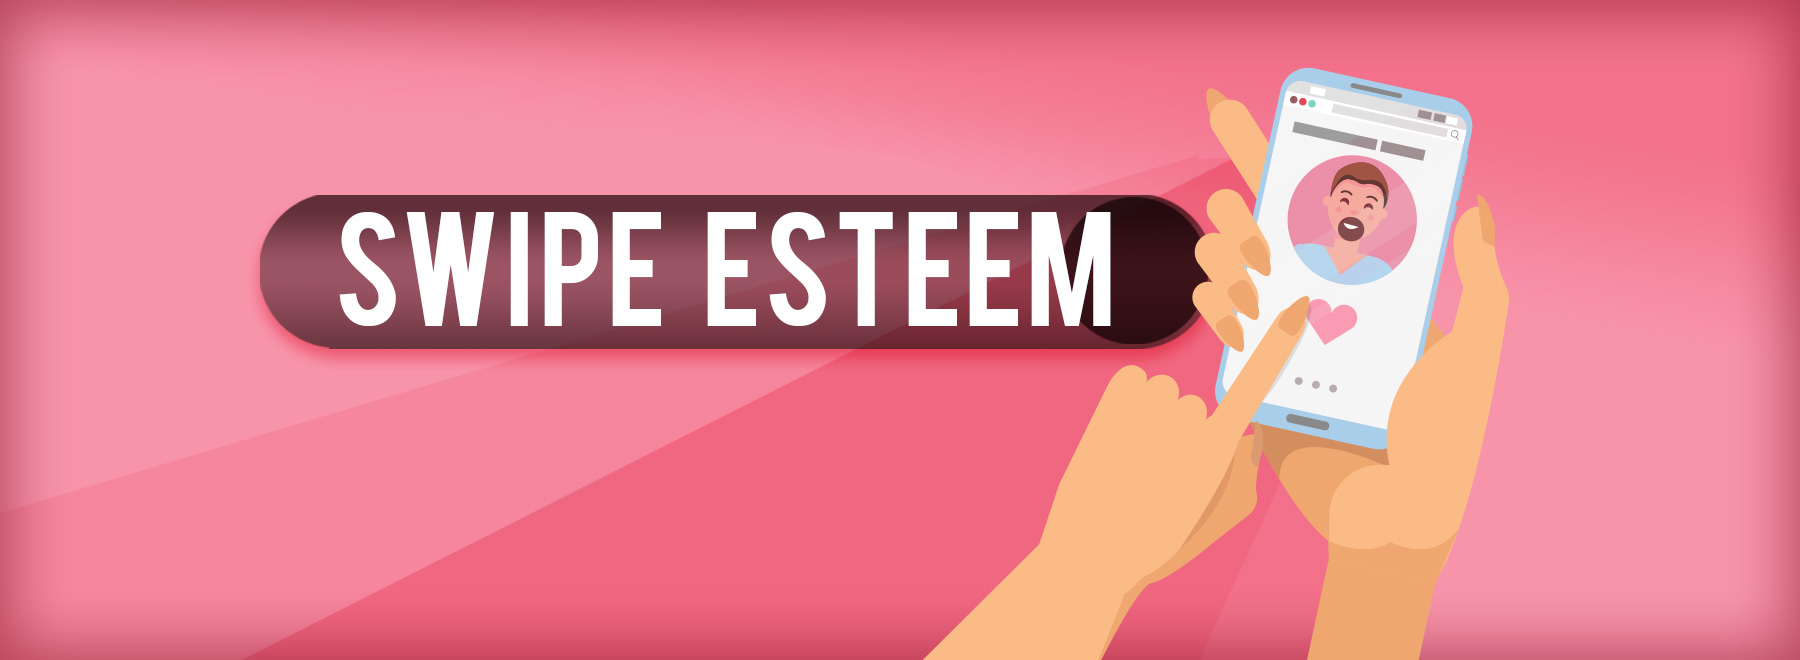 Swipe esteem title with illustration of date app being swiped